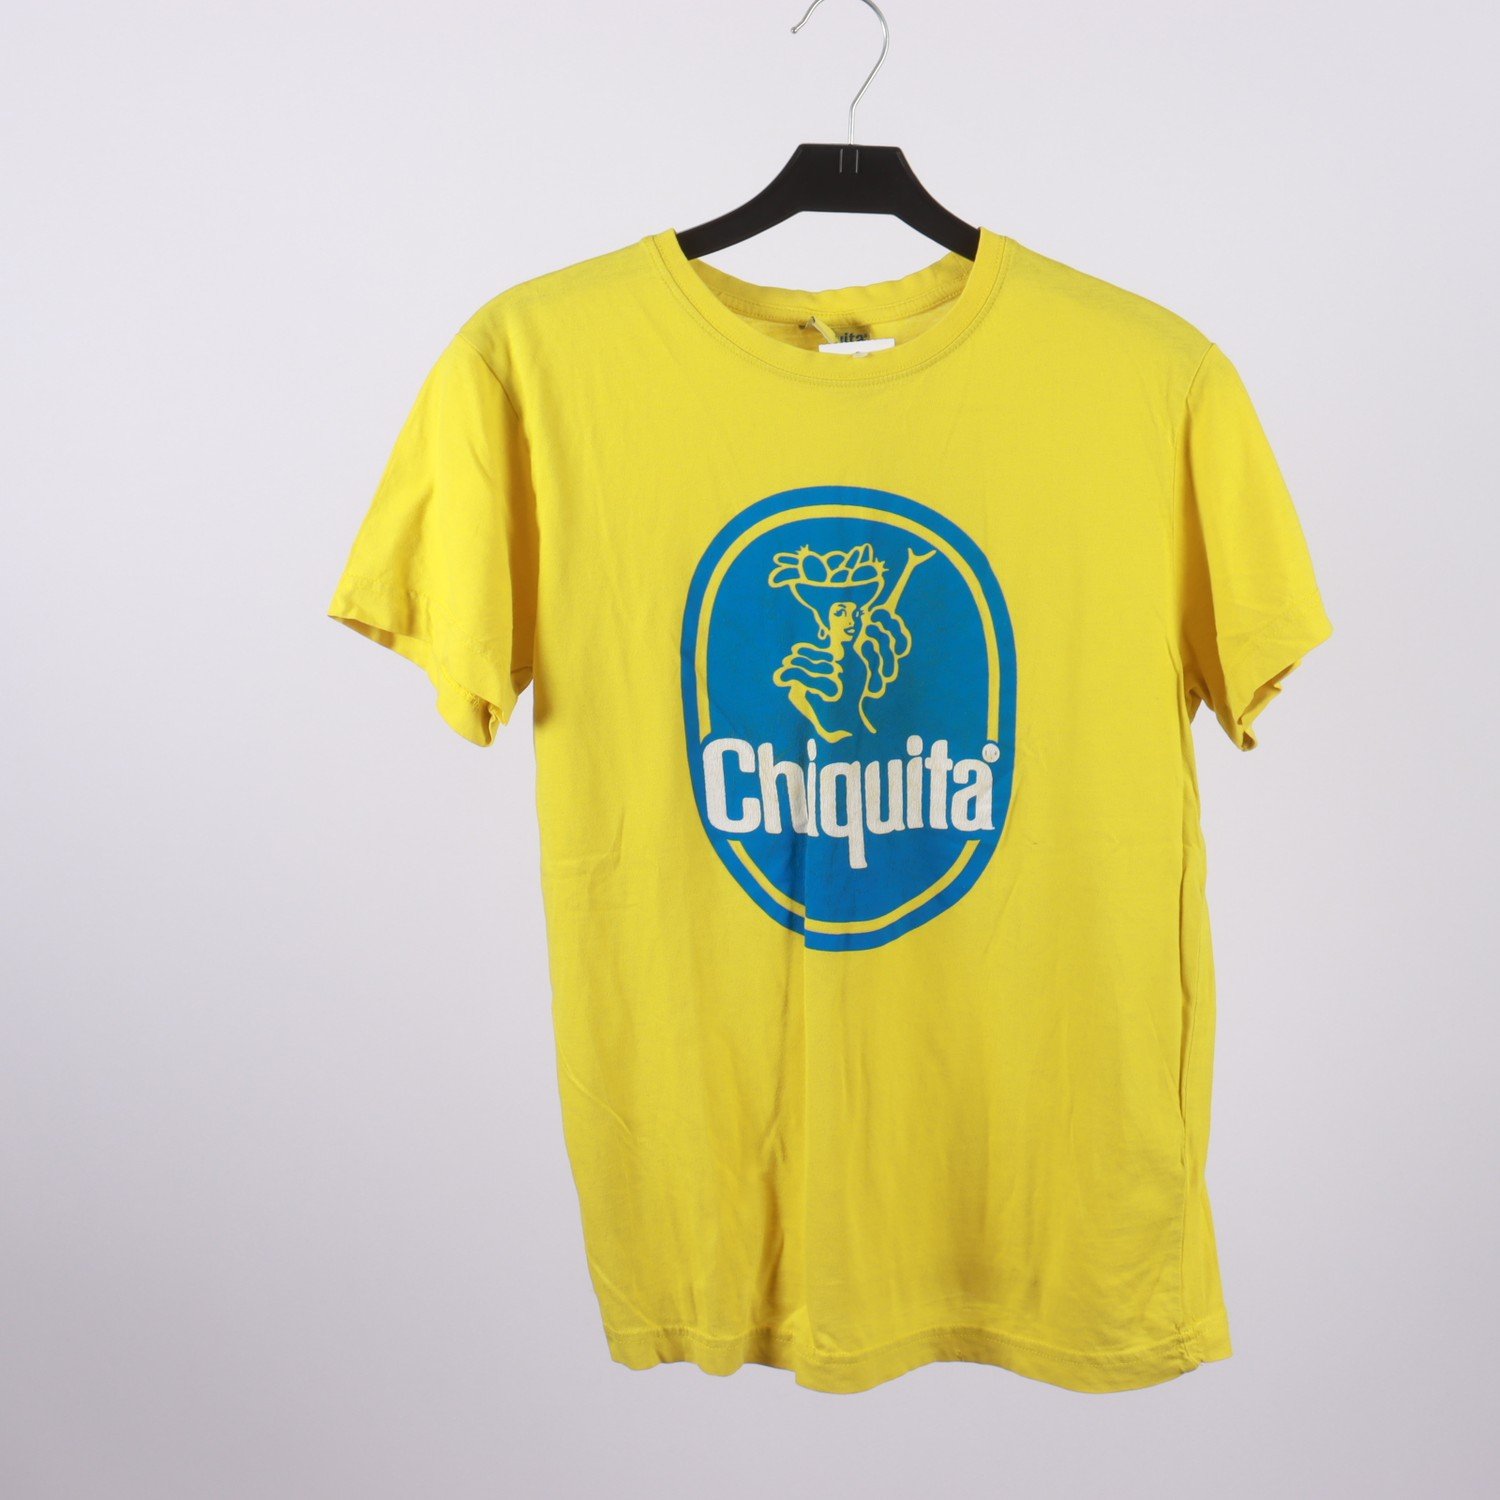 T-shirt, Chiquita, gul, stl. S